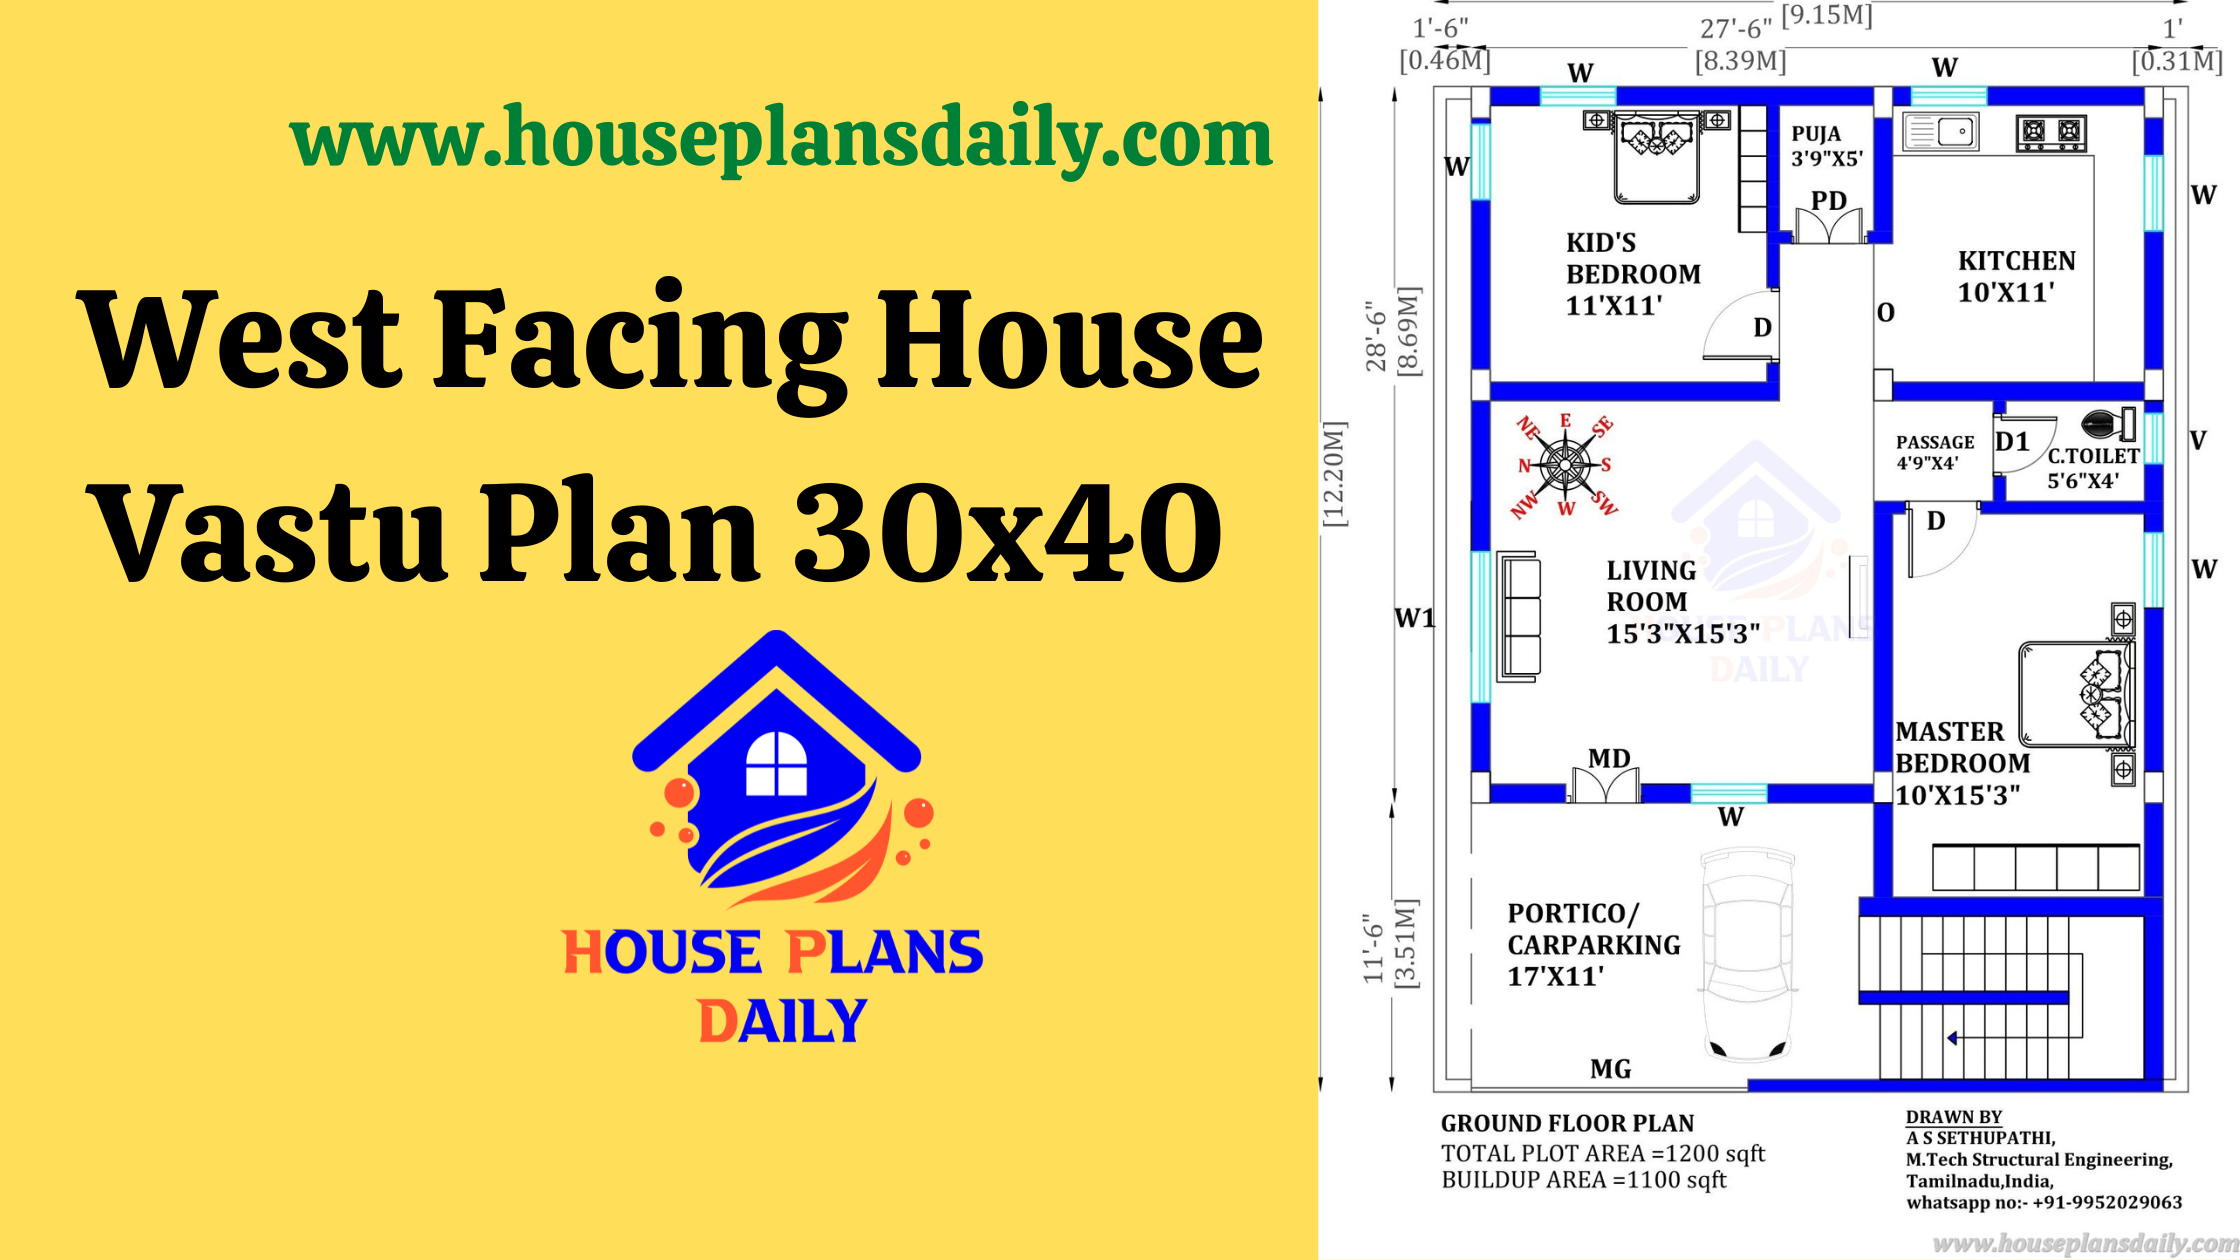 West Facing House Vastu Plan 30x40 | West Face House | Vastu Homes